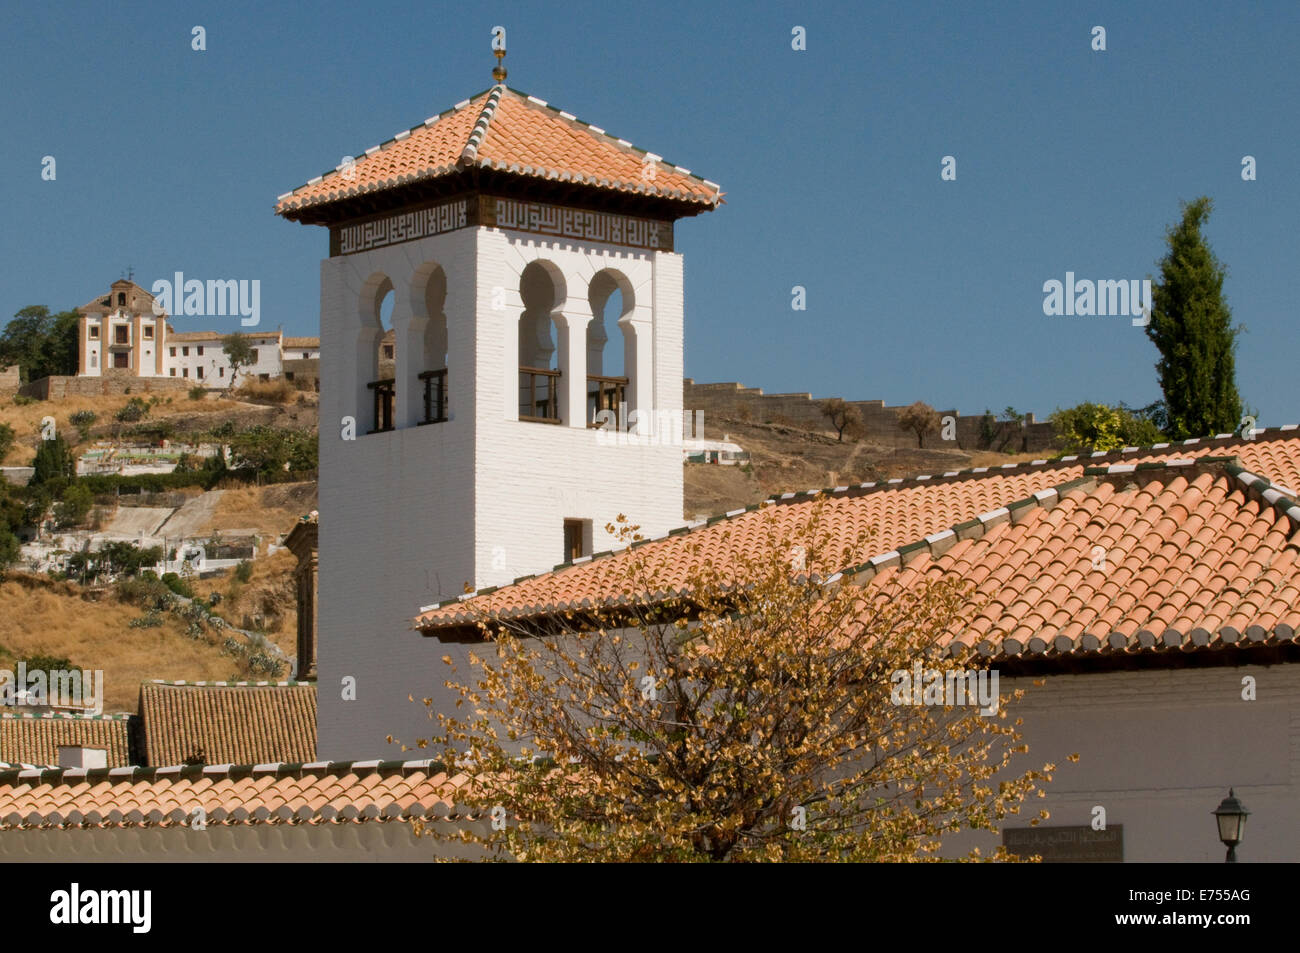 Moorish style architecture turret ceramic roof tiles hill view Granada Spain Stock Photo